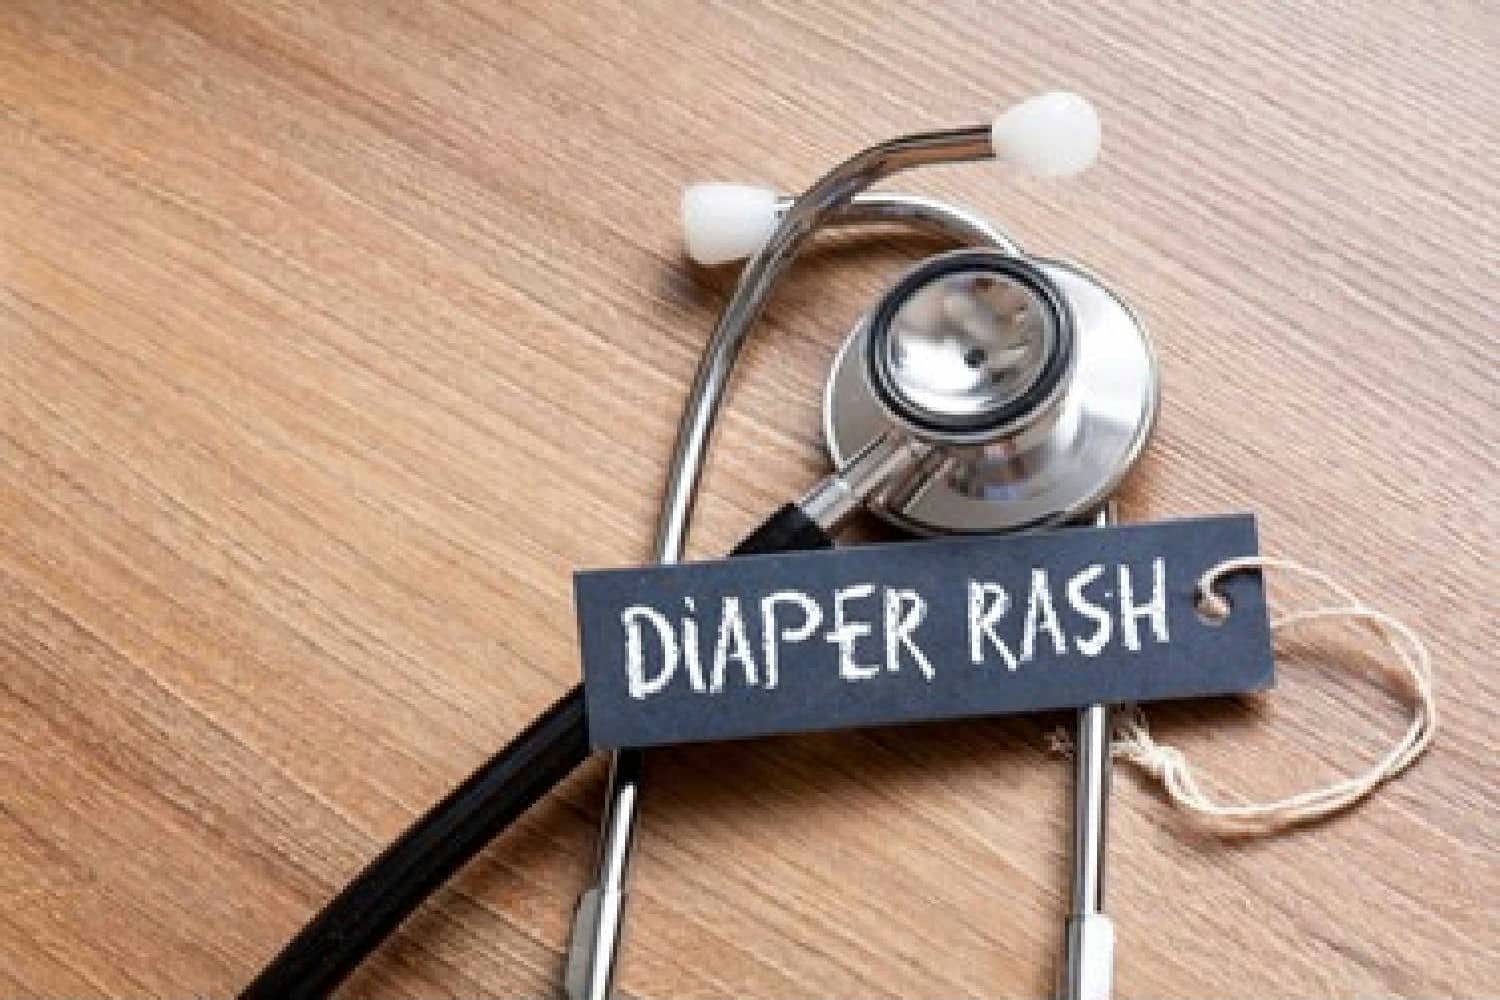 Diaper Rashes - Causes, Treatment, Home Remedies and Precautions.